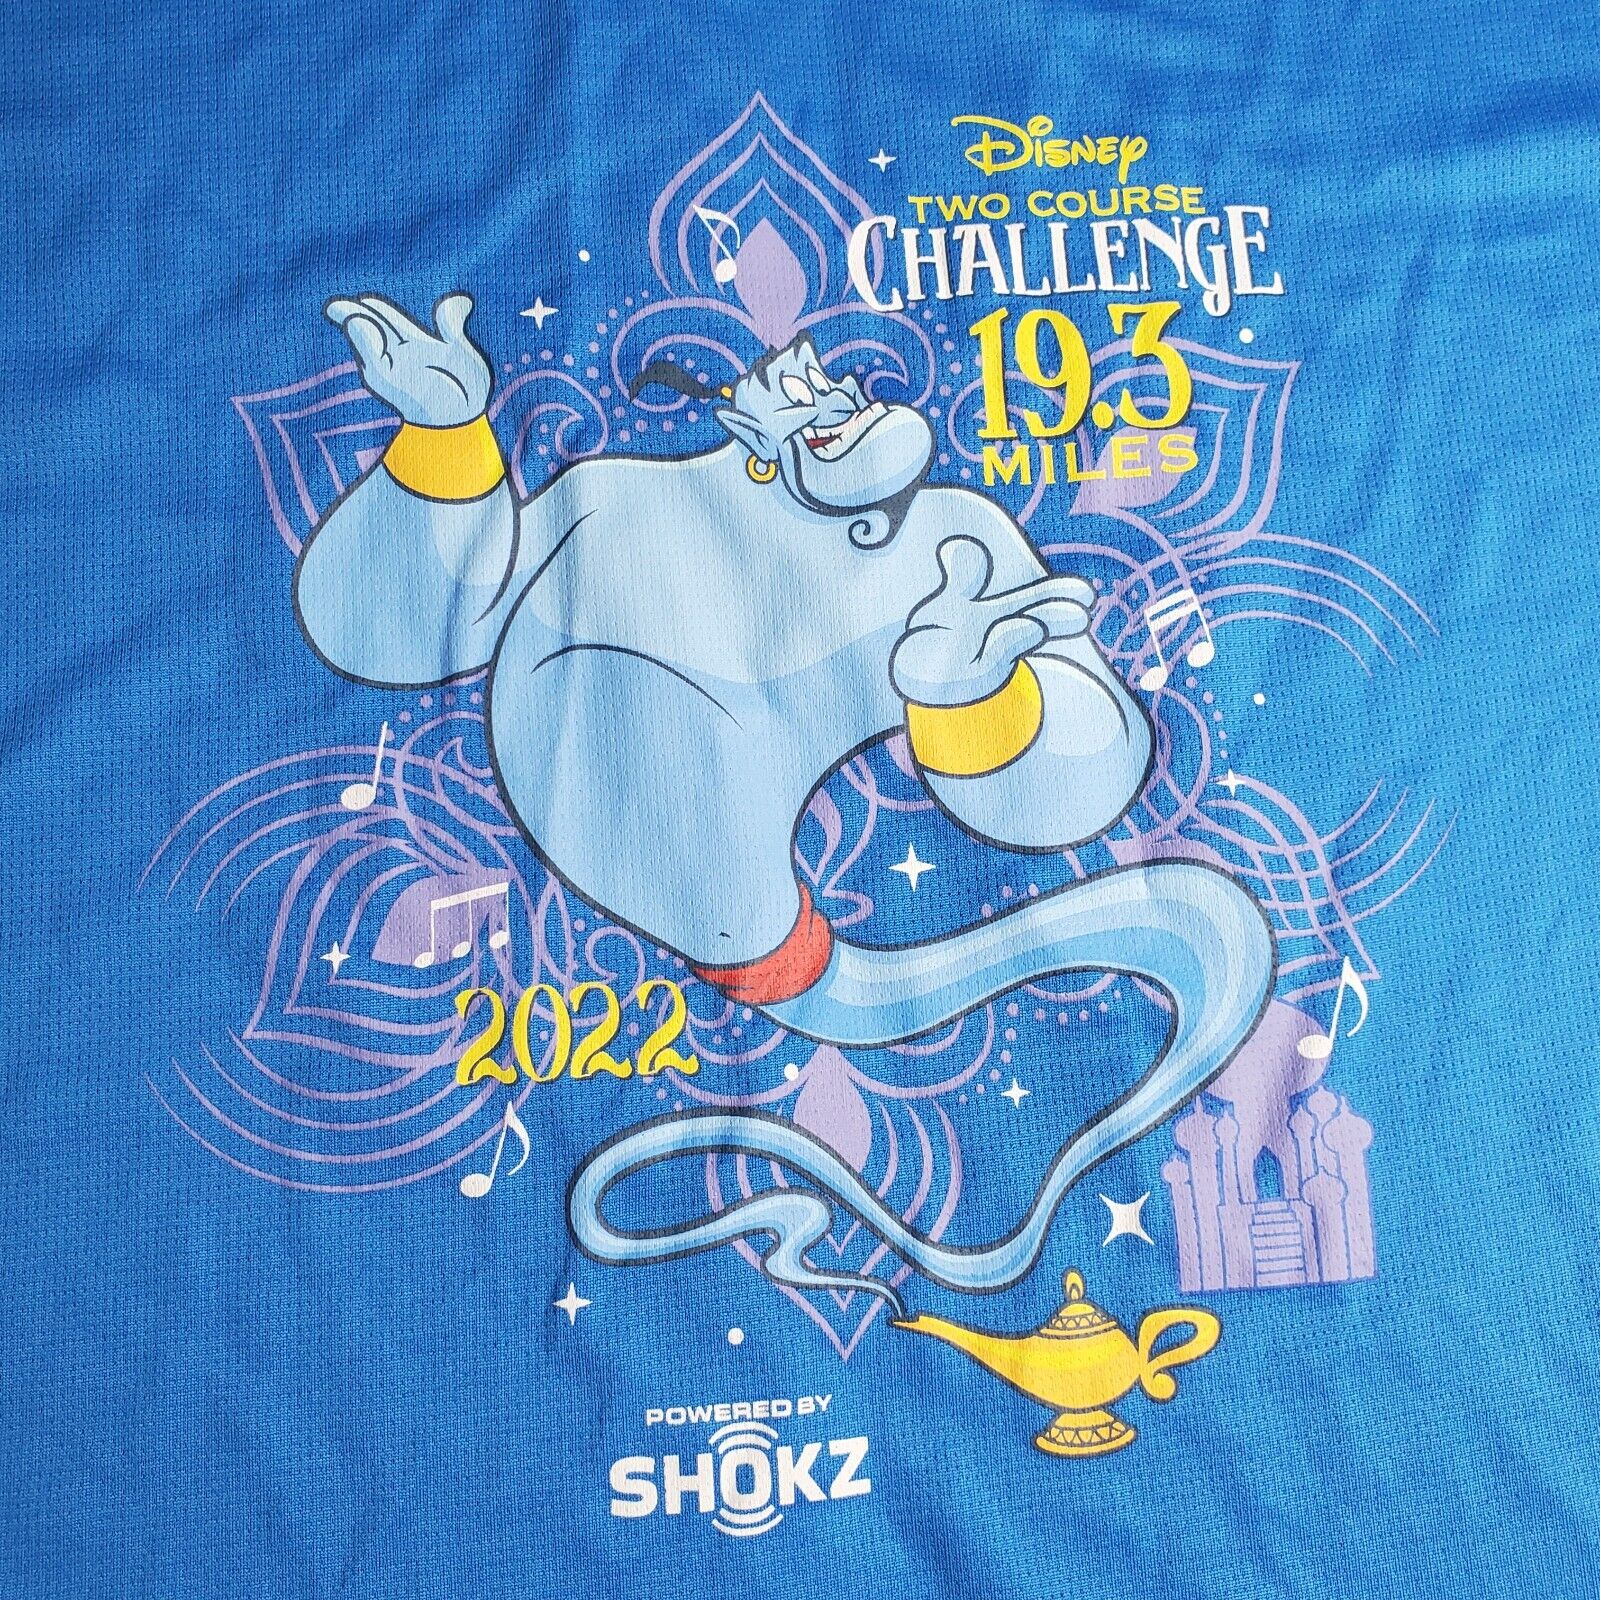 Run Disney Aladdin Genie Long Sleeve Shirt Women\'s Large Blue 19.3 Miles 2022